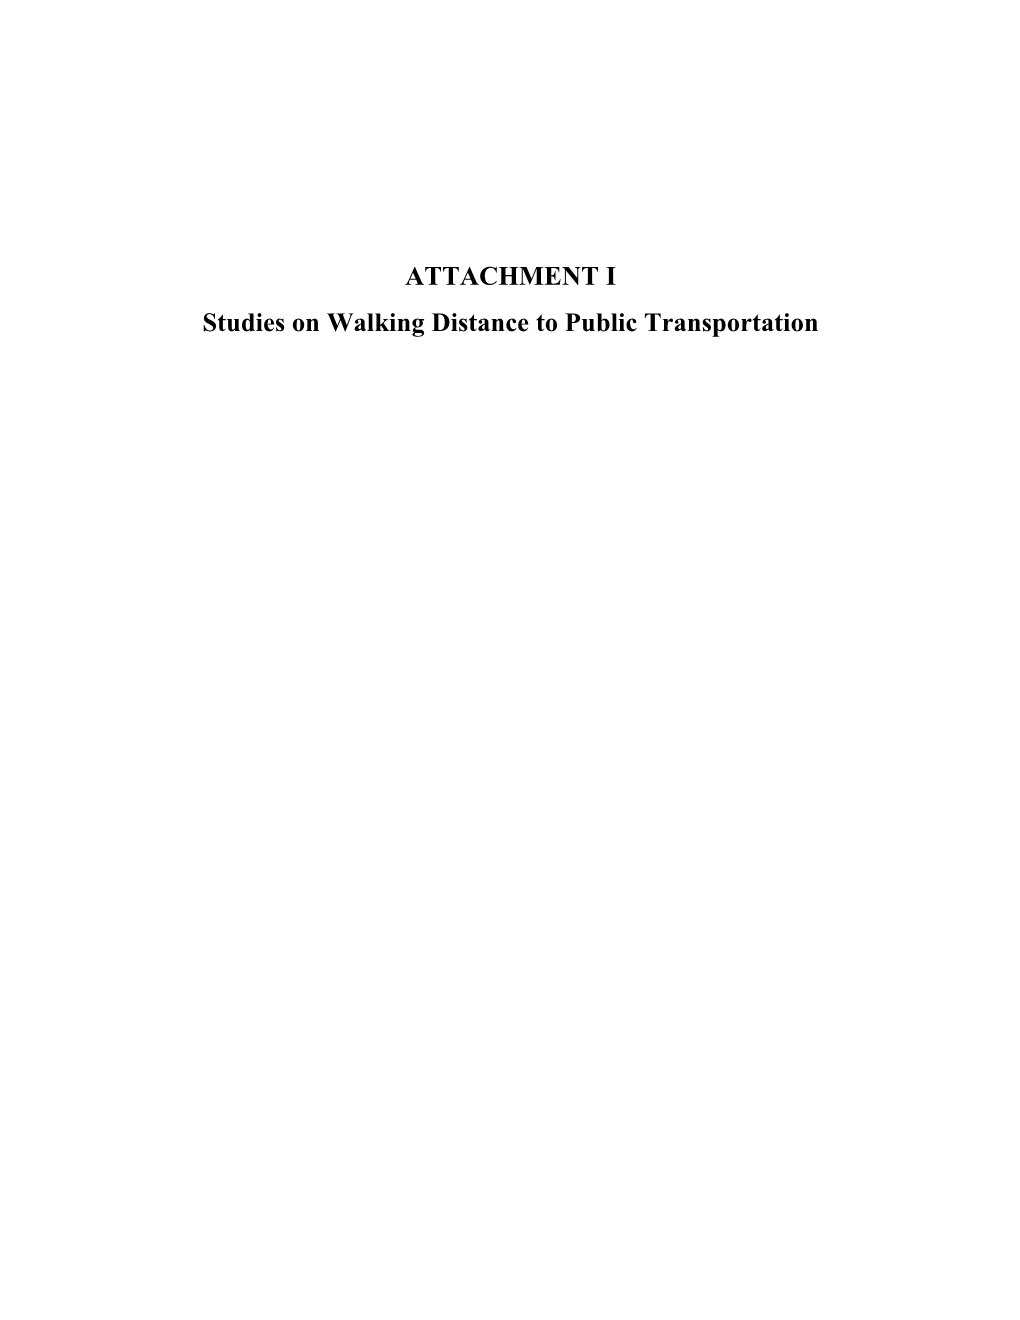 Studies on Walking Distance to Public Transportation        